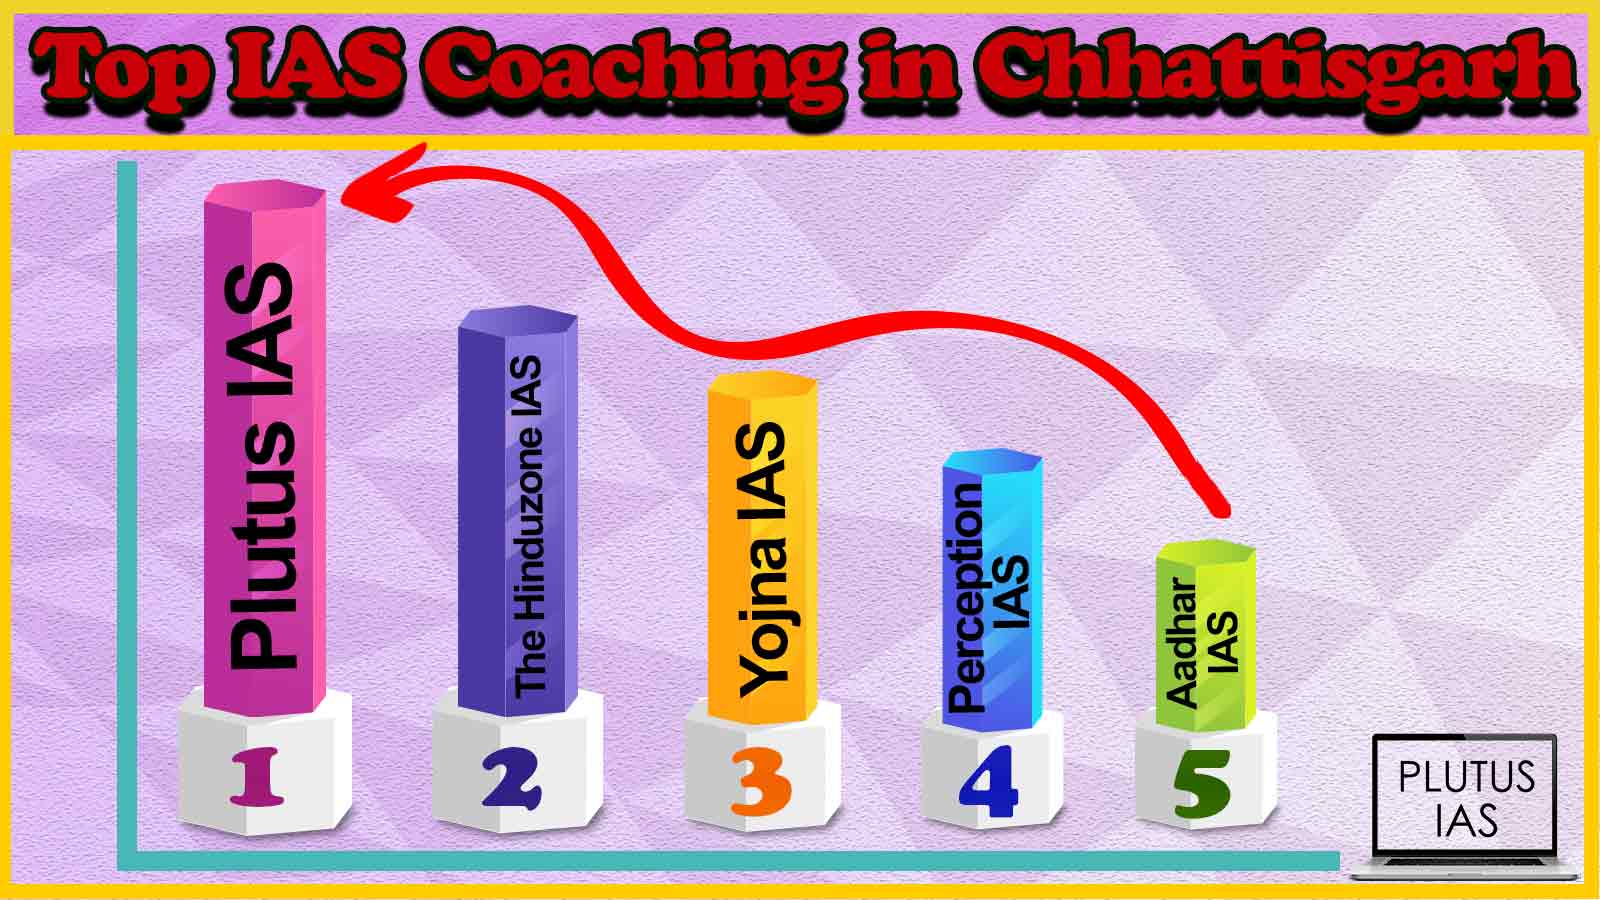 Best IAS Coaching in Chhattisgarh